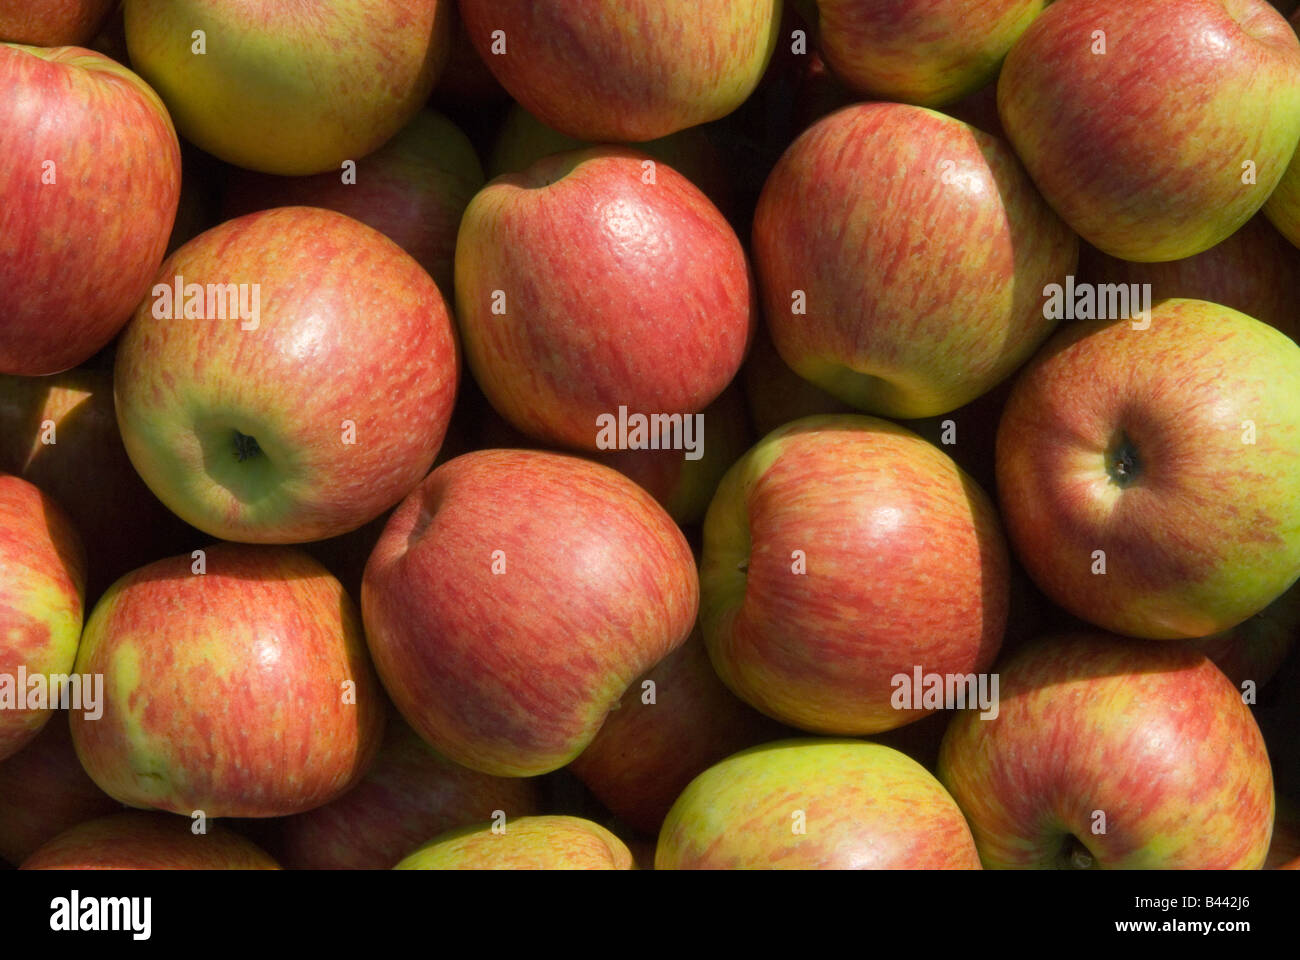 English Apples called 'Honey Crisp' apples Lathcoats Apple Farm Galleywood Essex UK Stock Photo